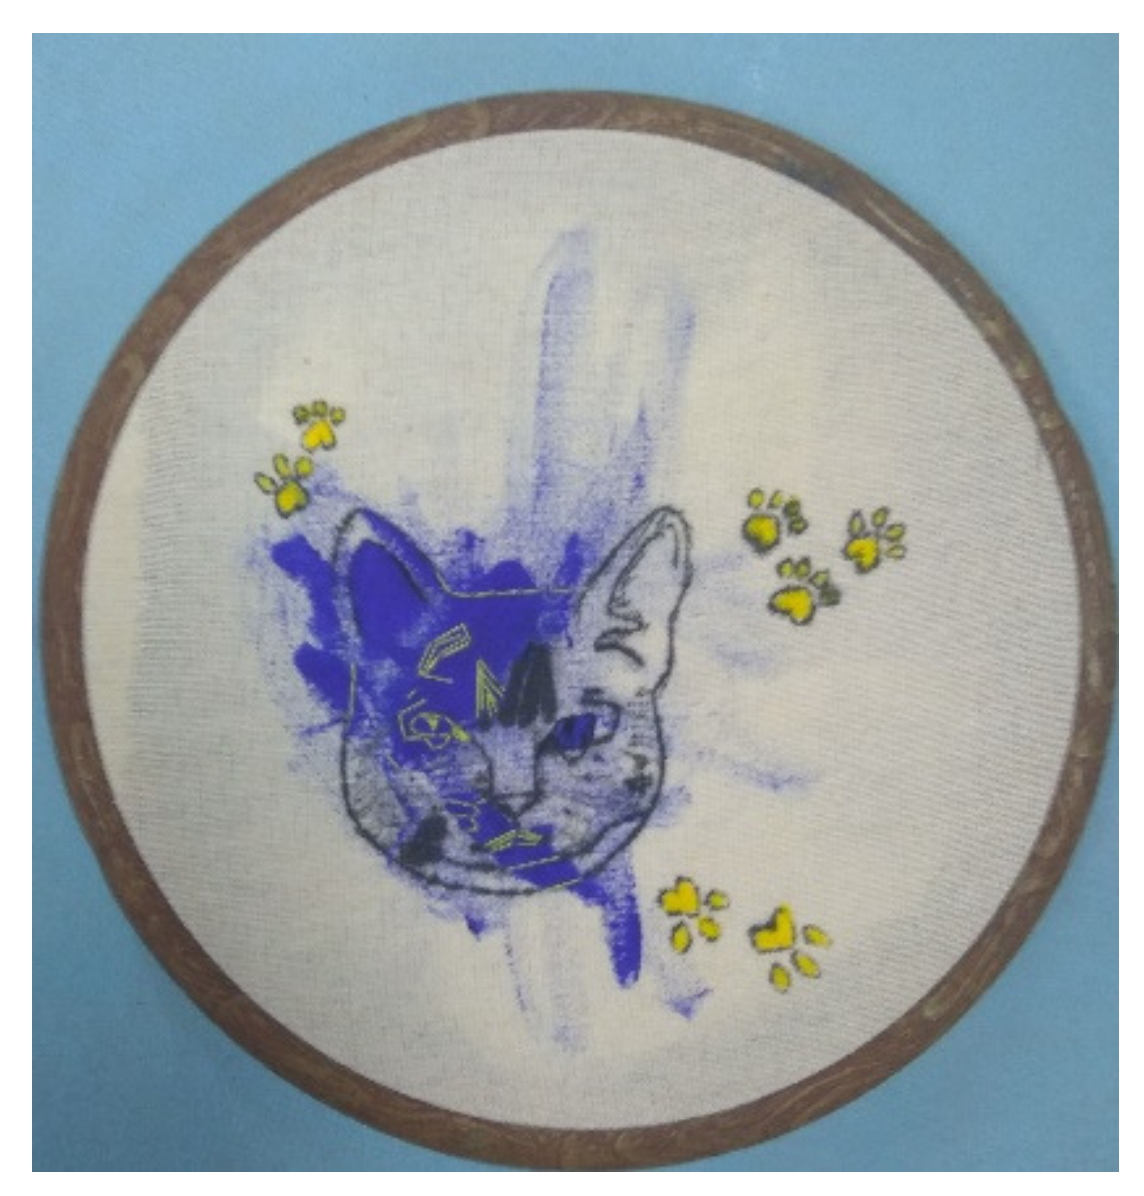 Art Journal: Slow Stitch Interpretation